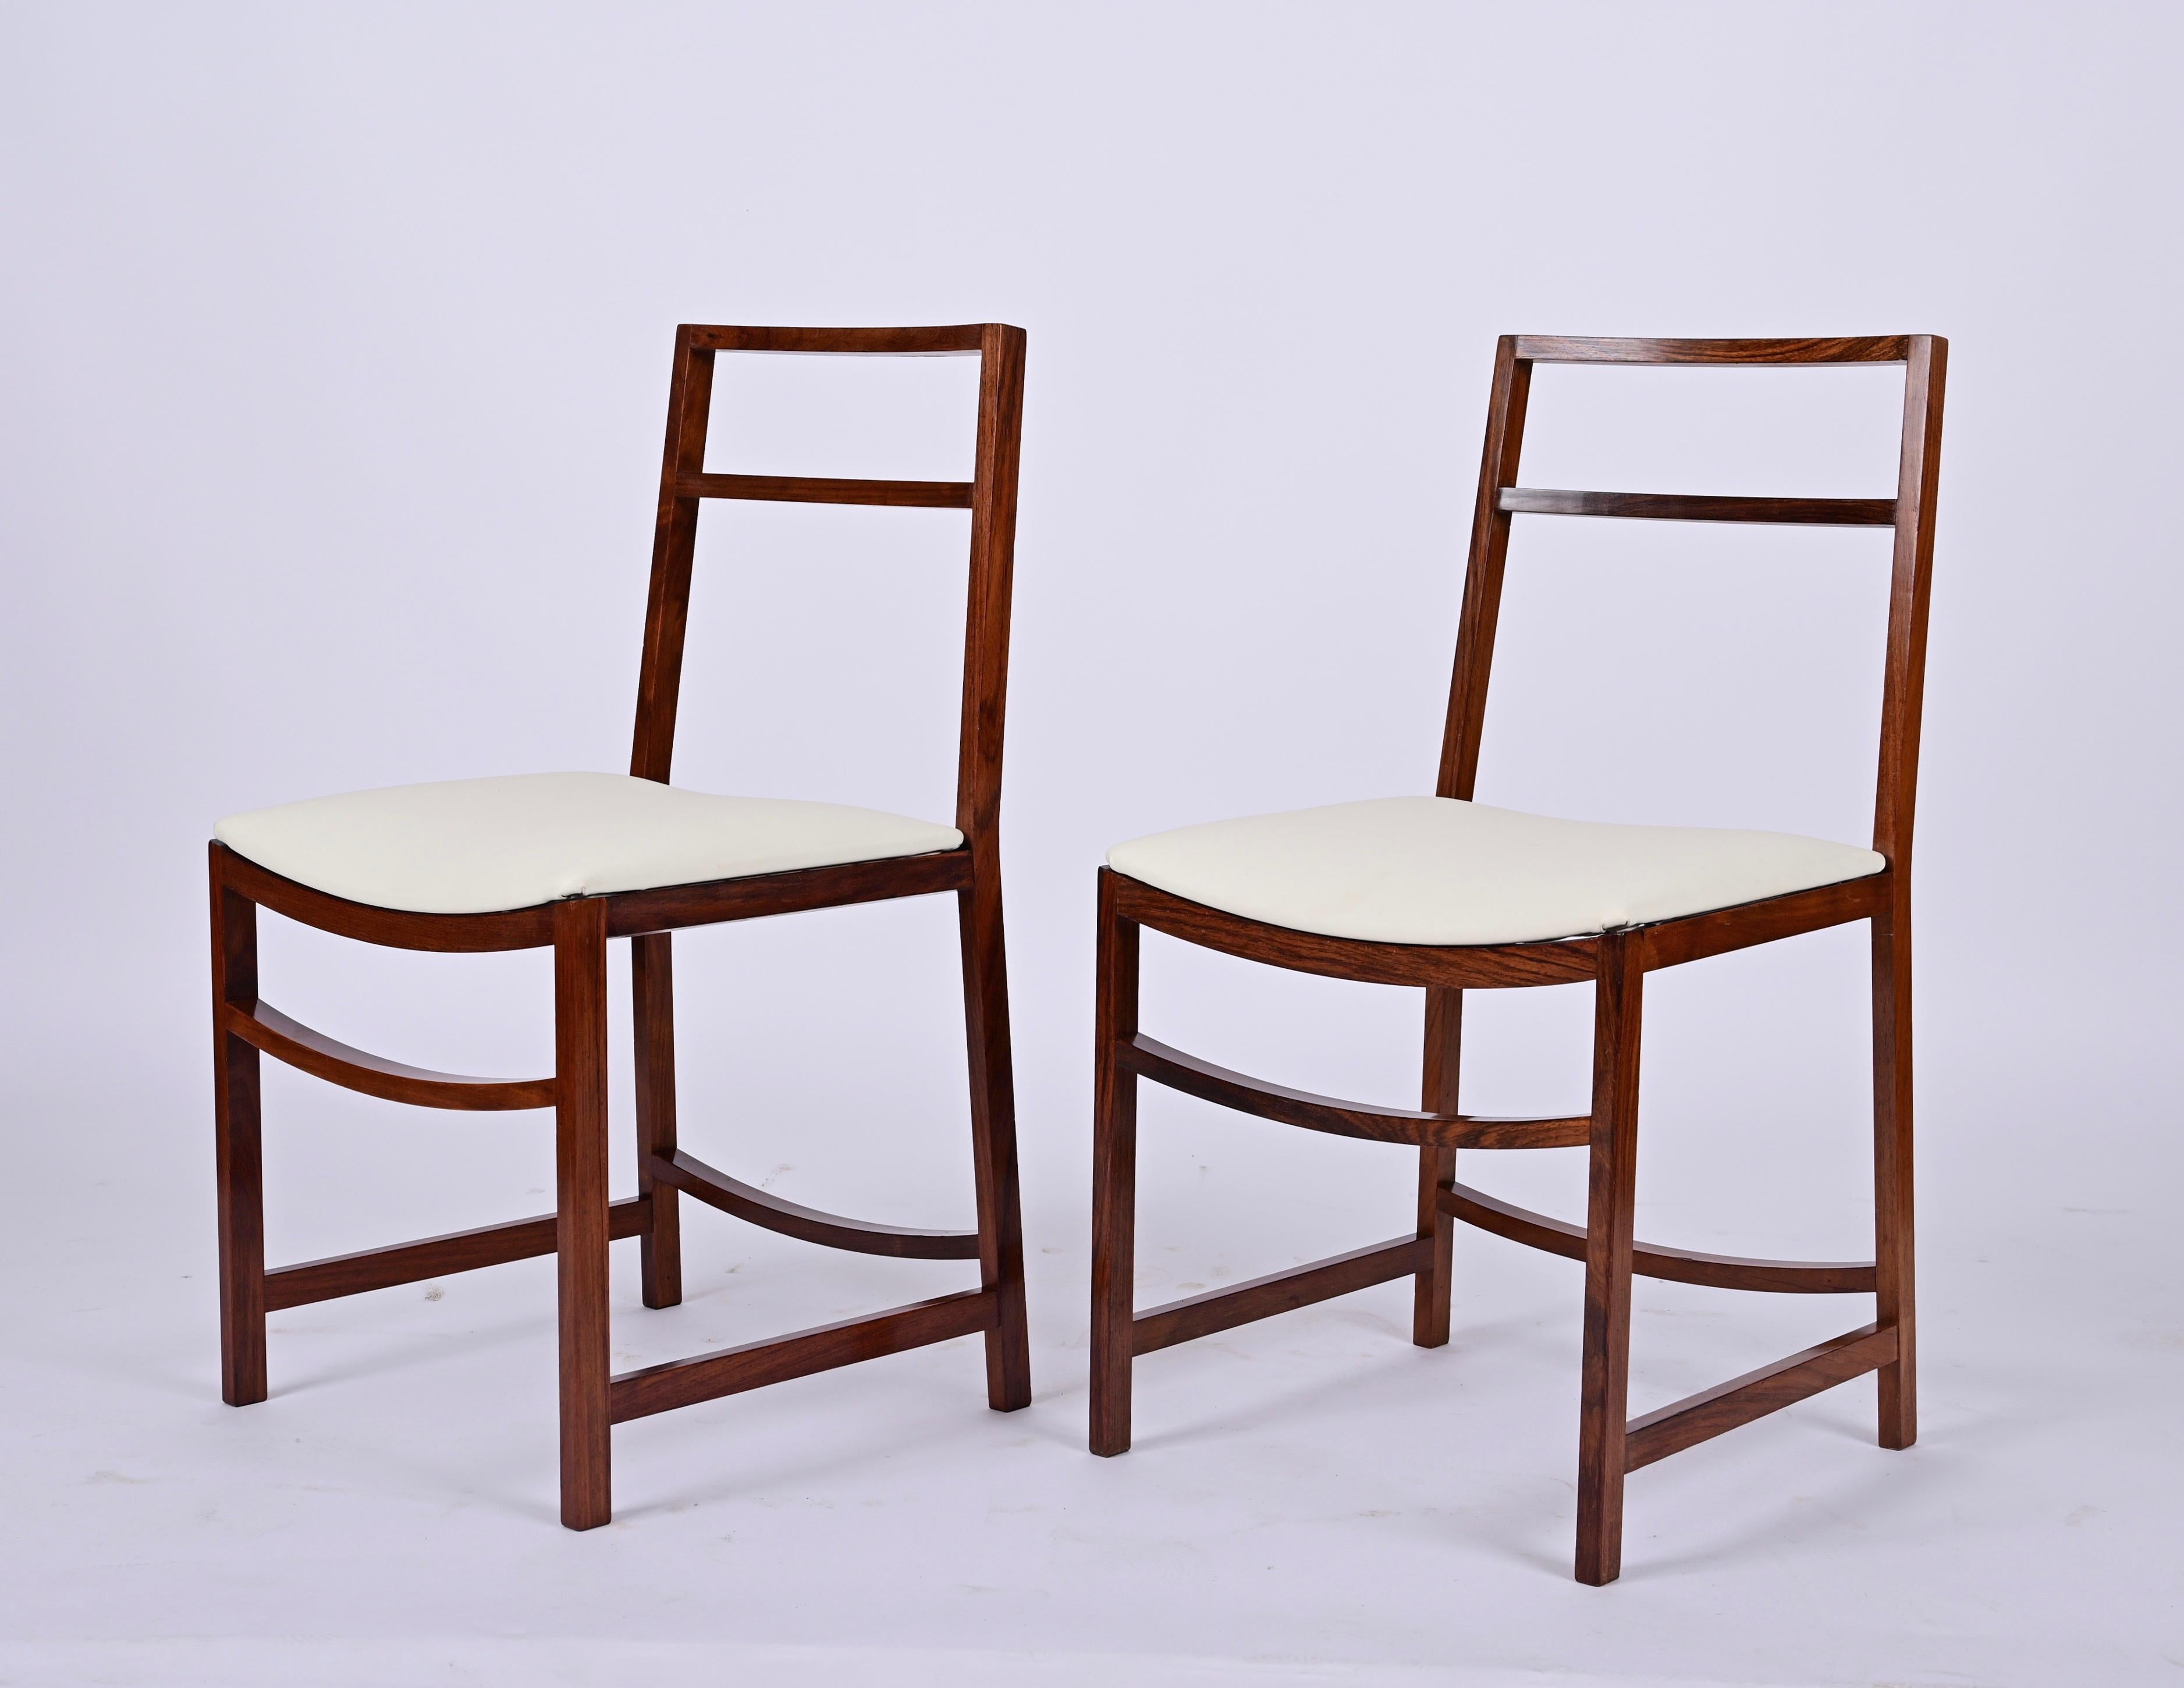 Midcentury Italian Dining Chairs in Teak, Renato Venturi for MIM Roma, 1960s For Sale 7